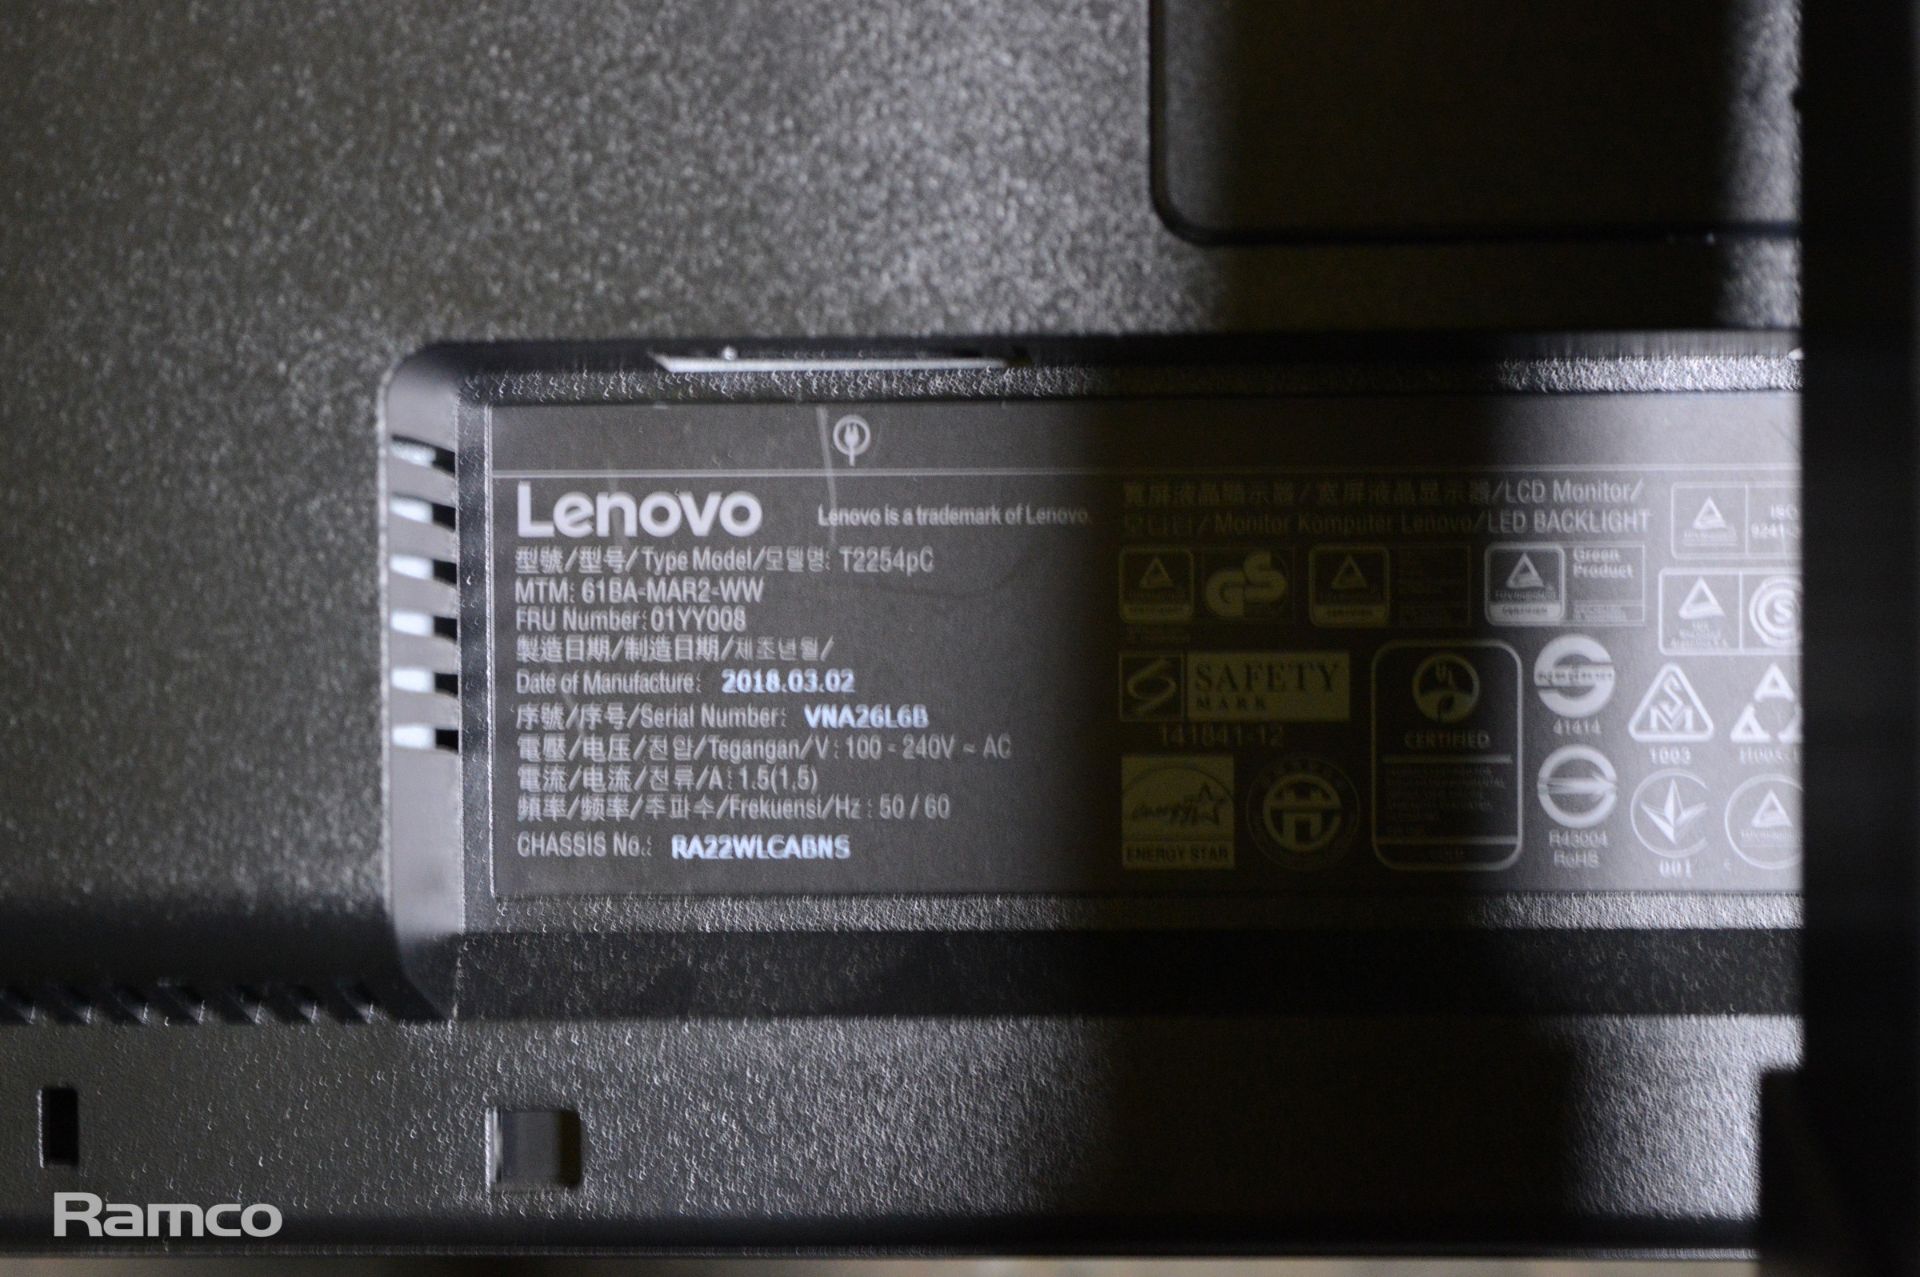 3x Lenovo ThinkVision T23d-10 23 Inch Monitor, 3x Lenovo ThinkVision T2254PC 22 Inch Monitor - Image 4 of 6